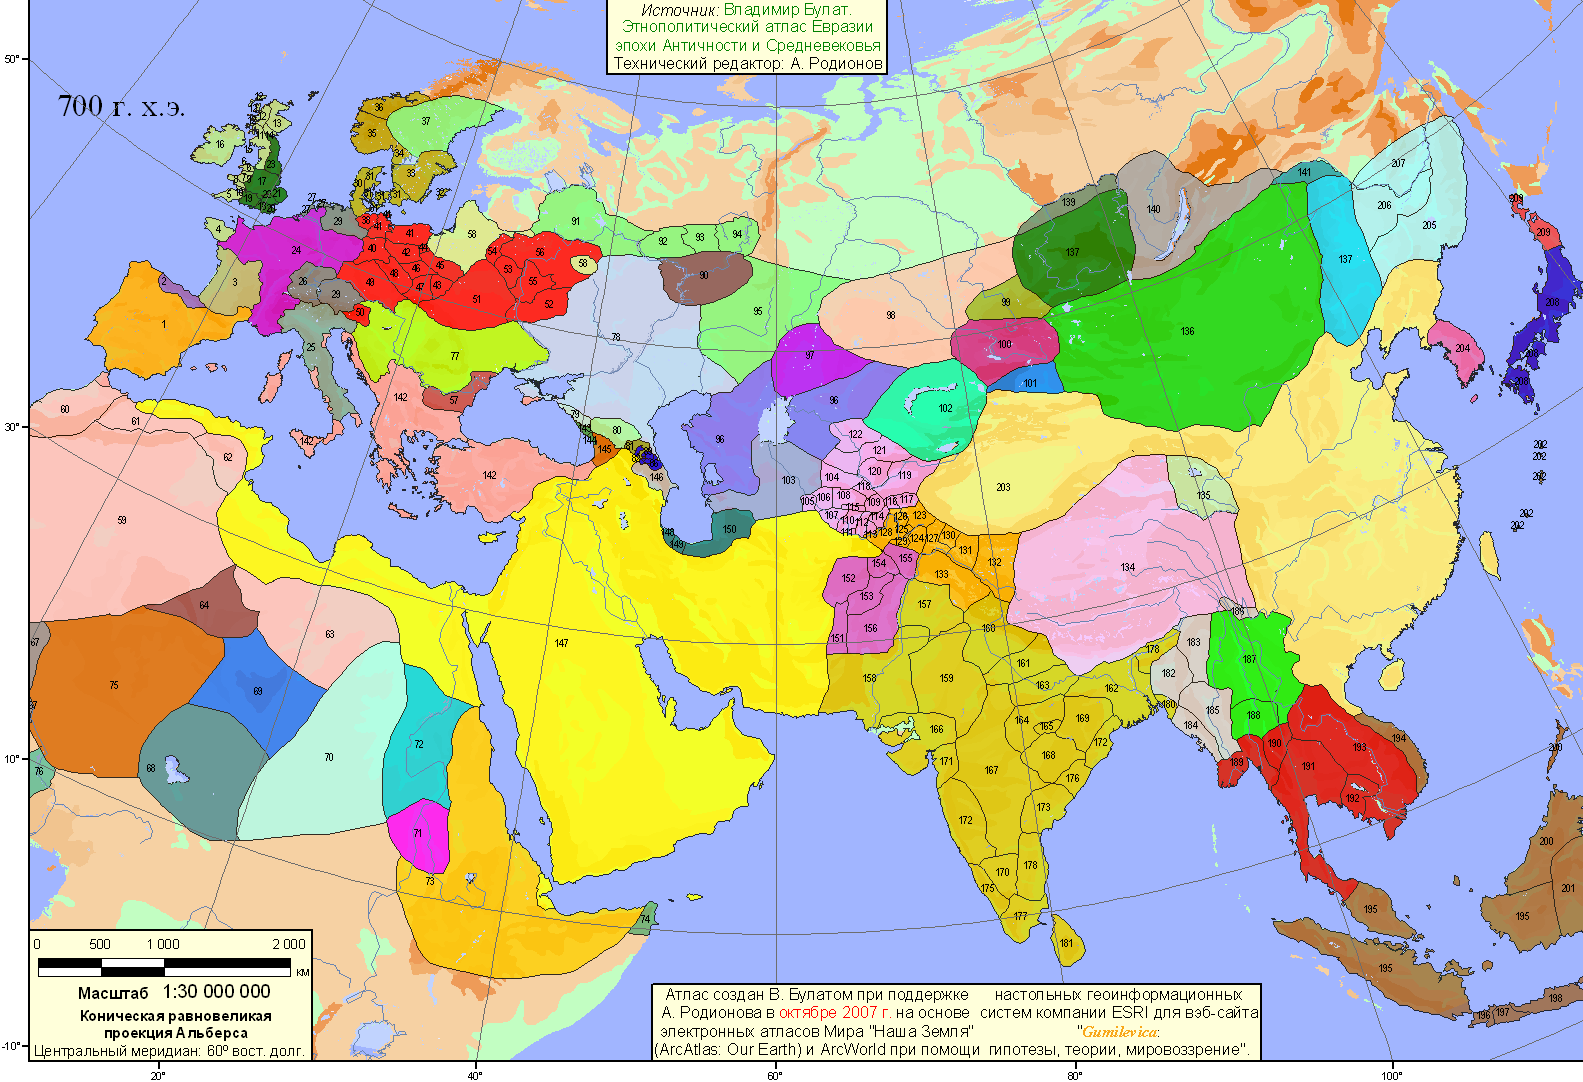 Eurasia - 700 AD (328 Kbytes)